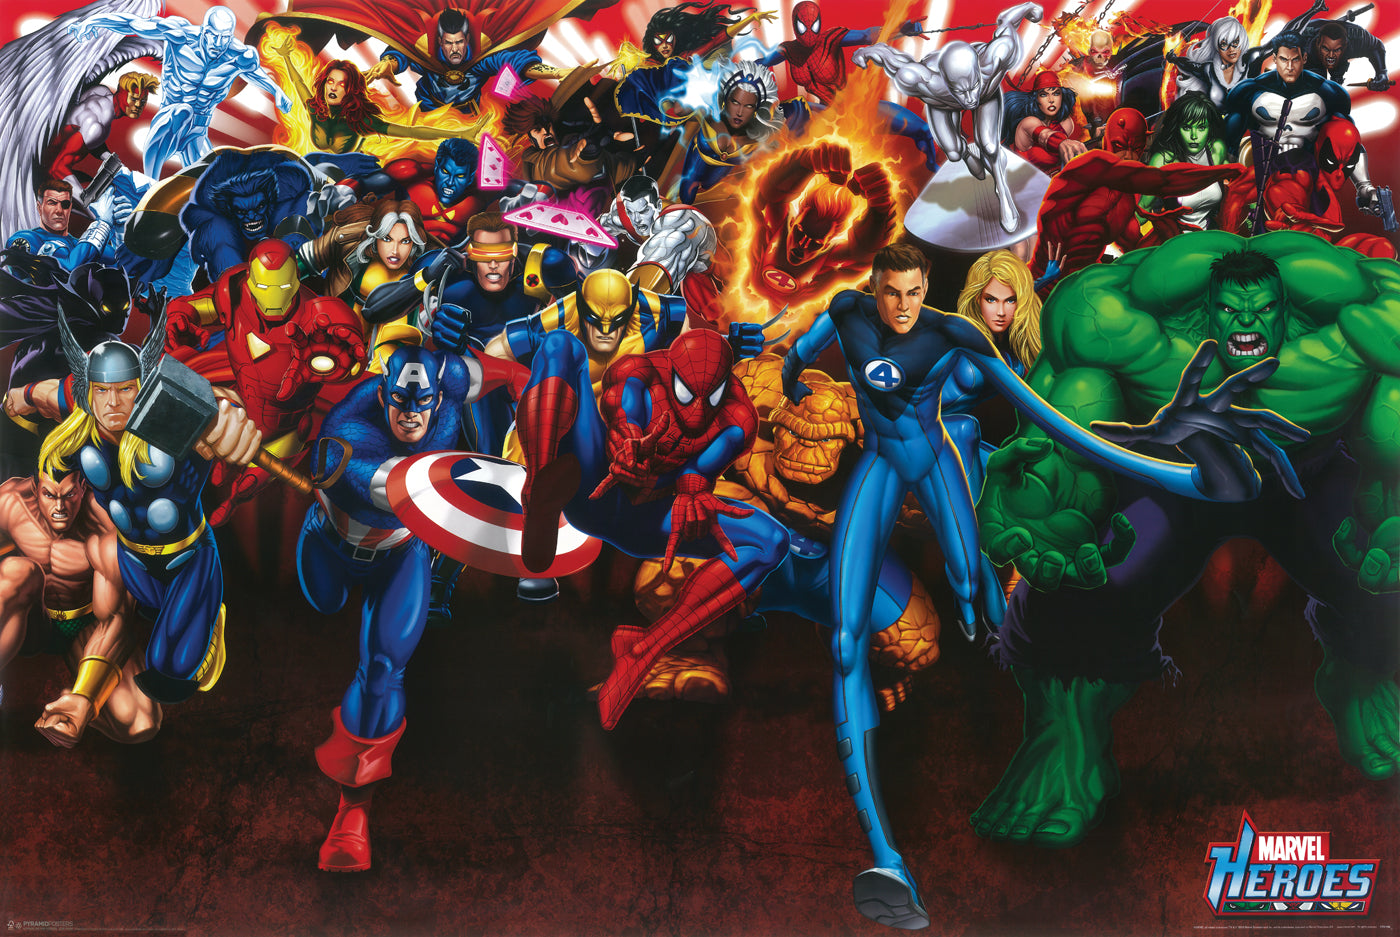 Marvel Heroes Collage 24x36 Premium Art Poster - Team Spirit Store USA 